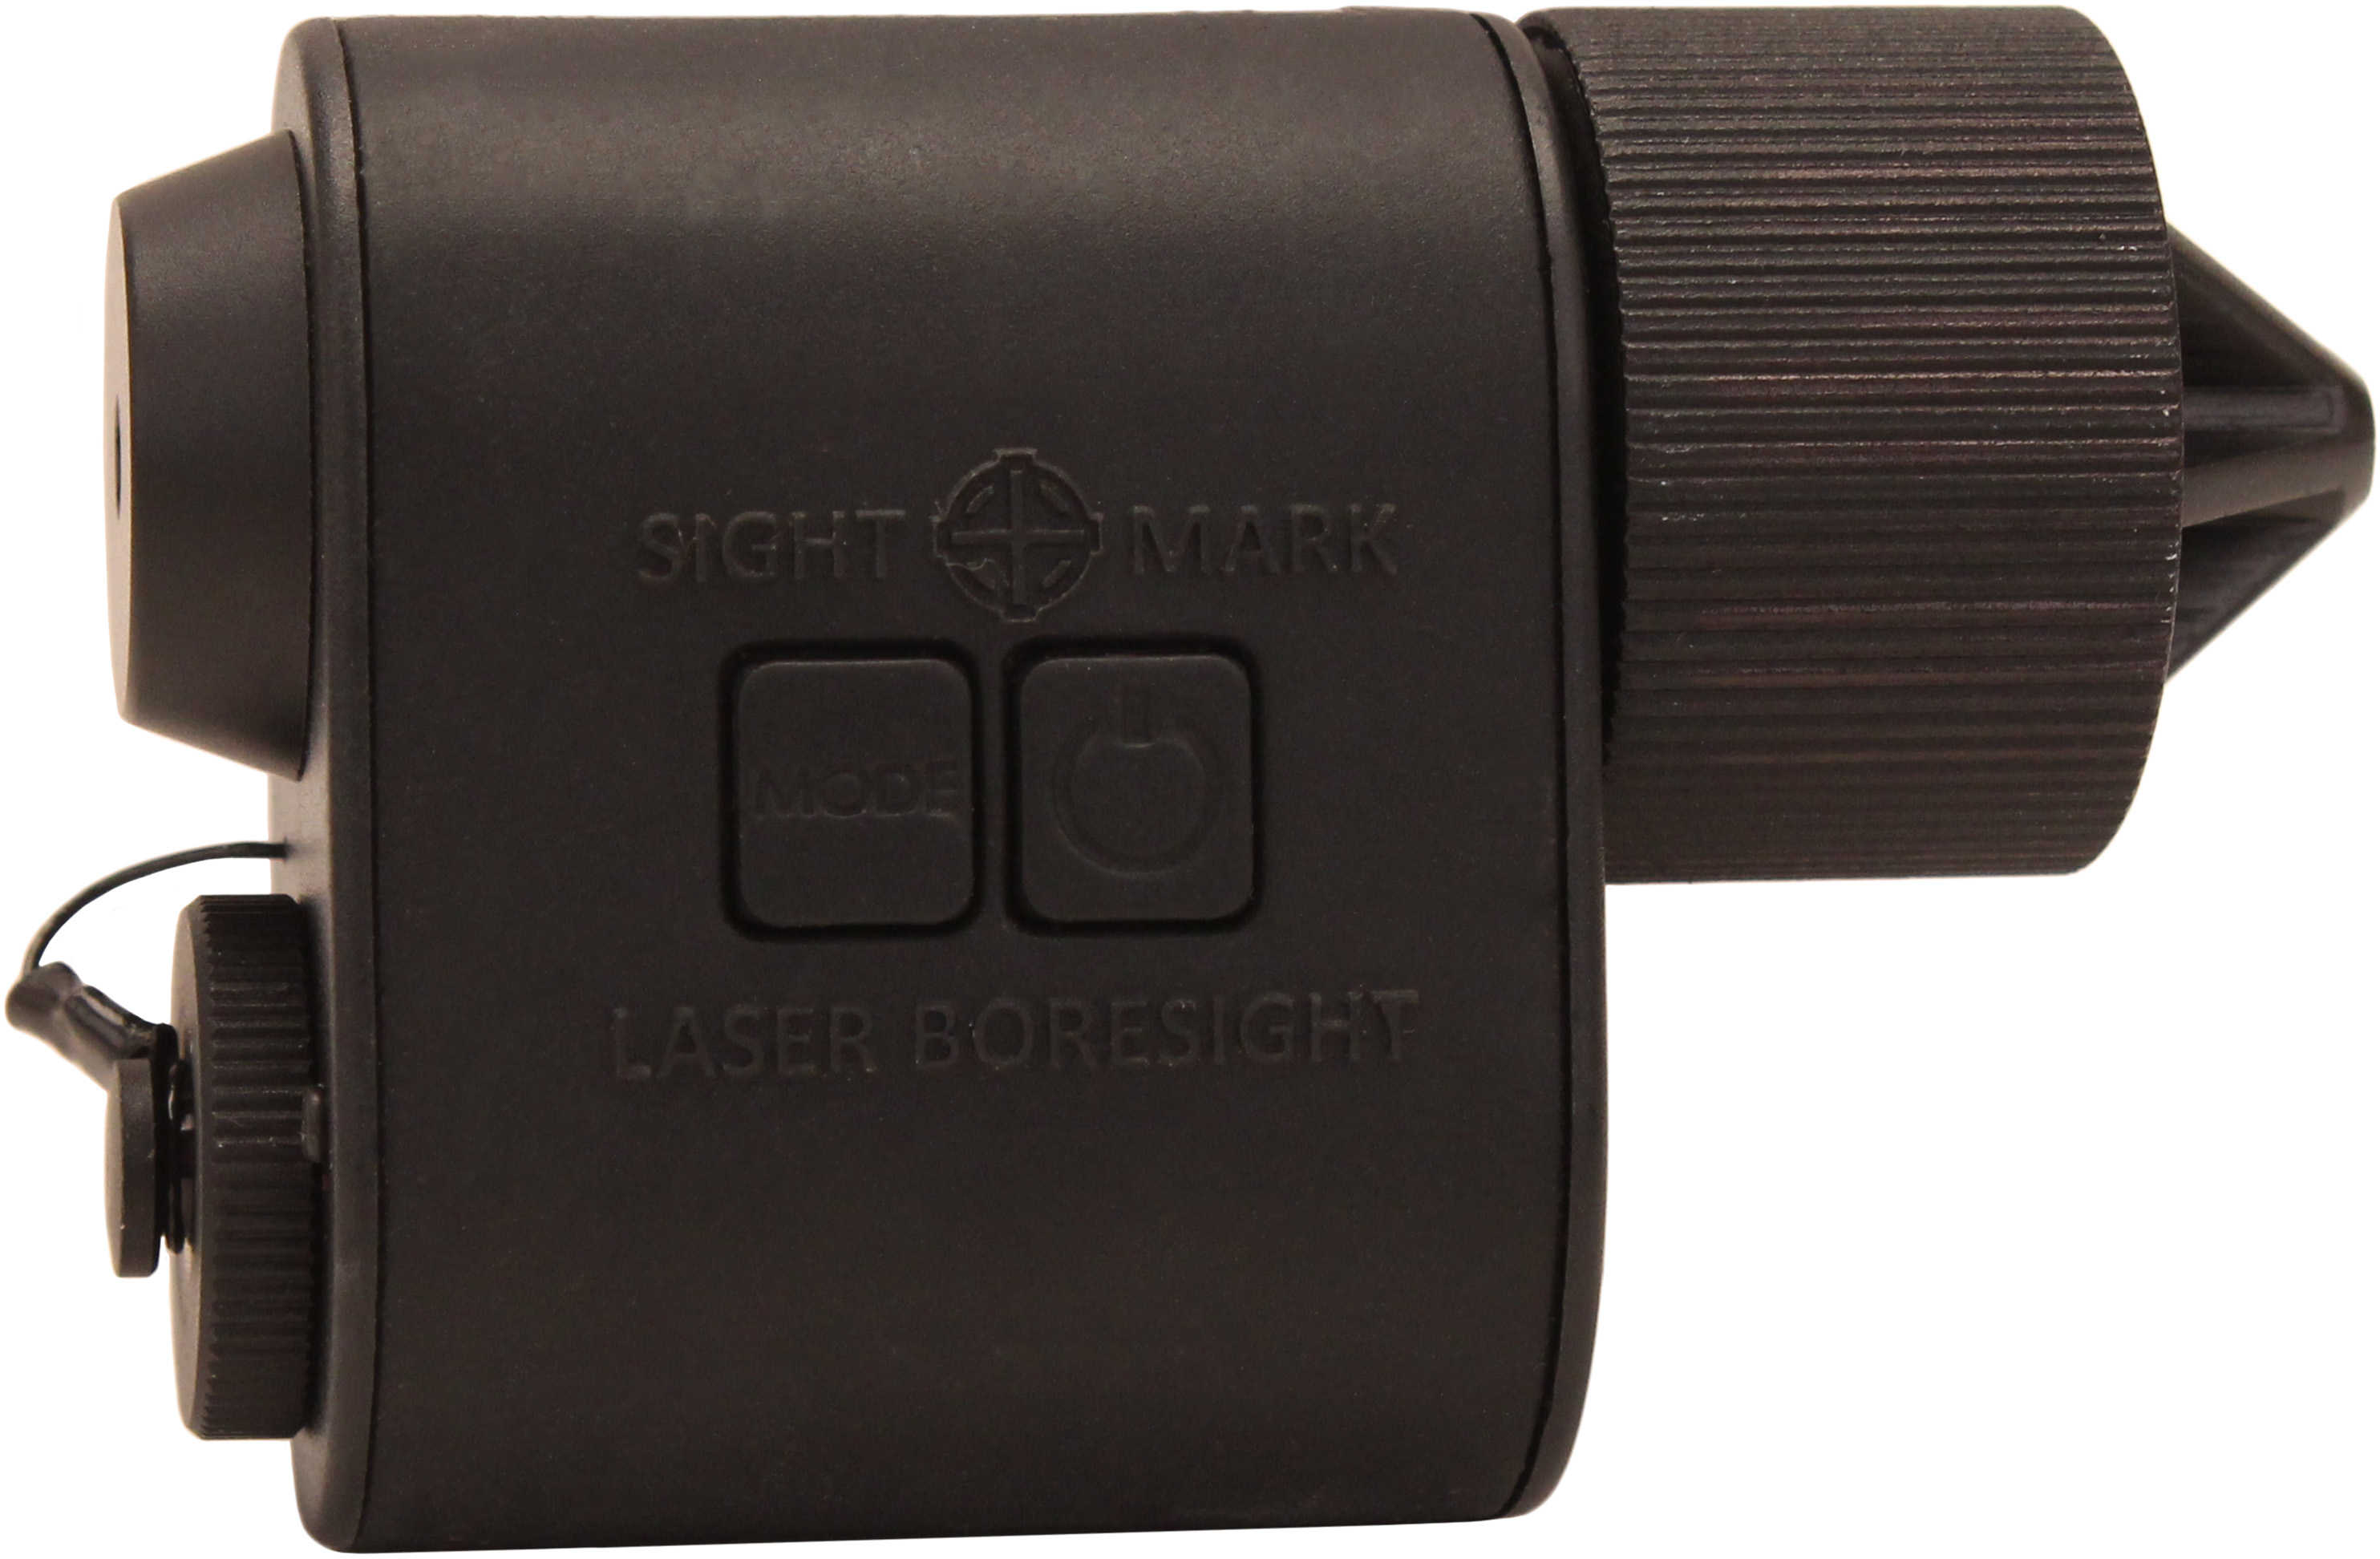 Sightmark Universal Green Laser Boresight, Pro Md: SM39044